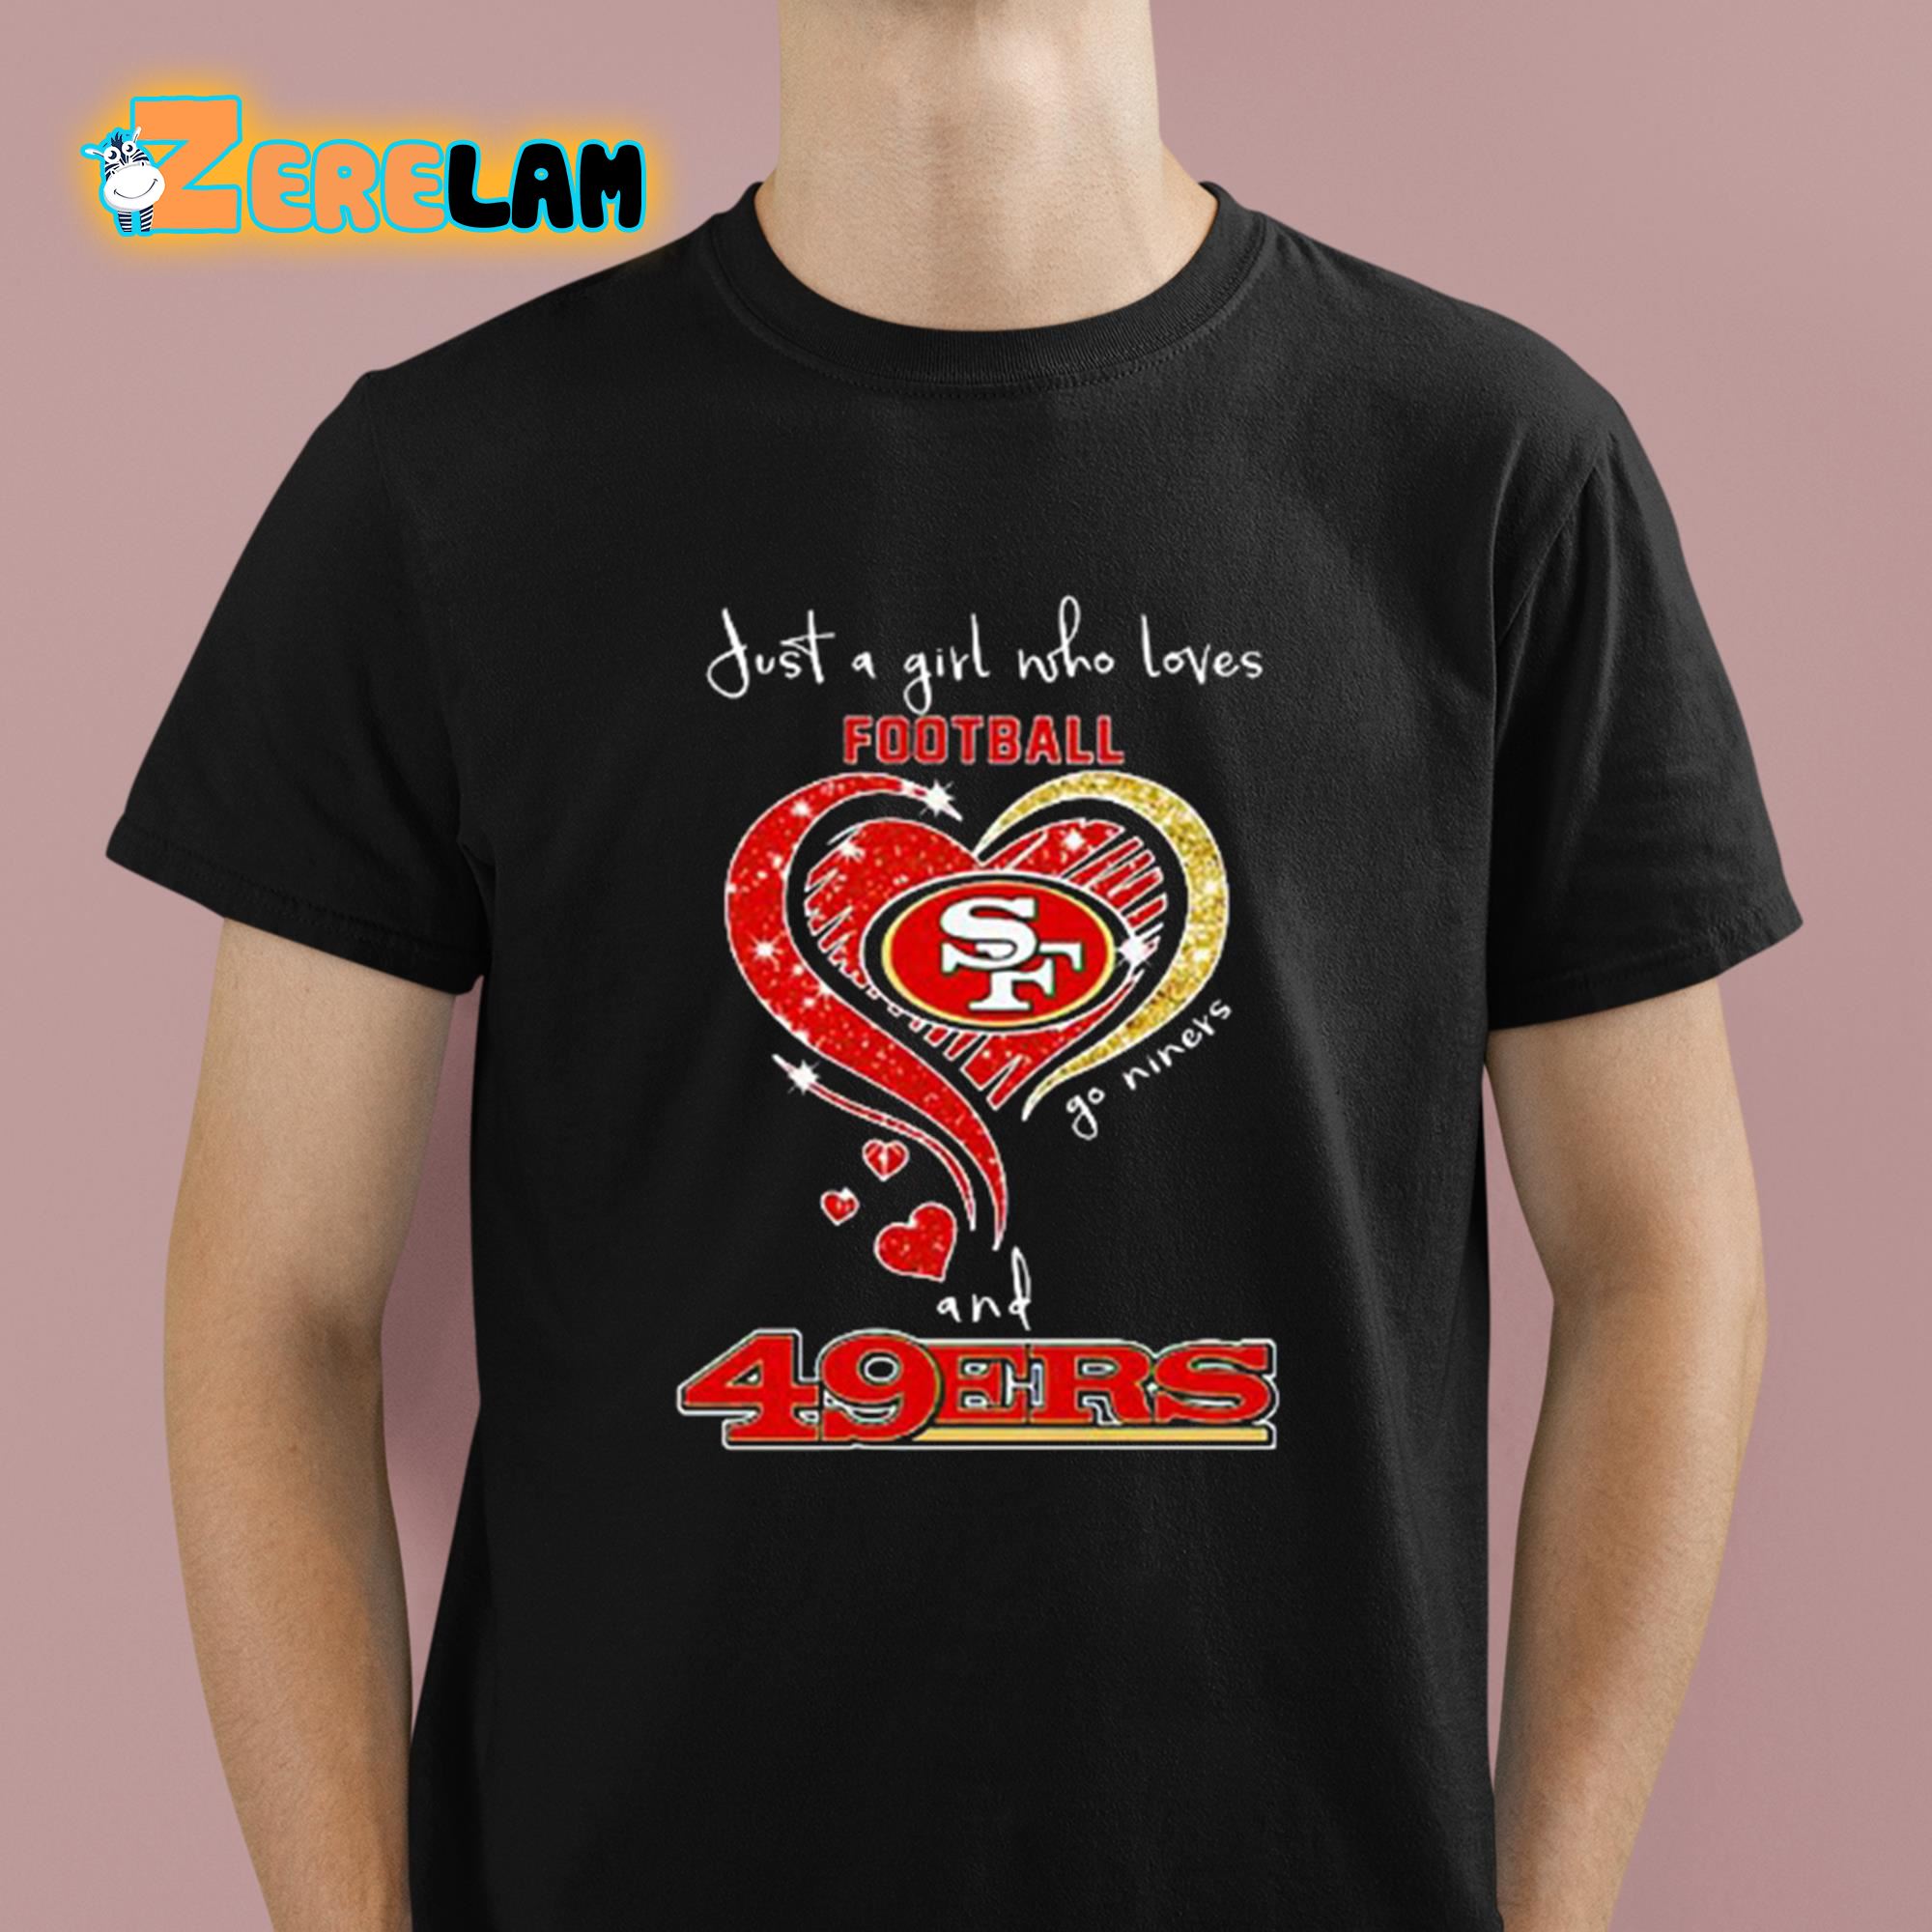 Real Women Love Football Smart Women Love The 49ERS Shirt - teejeep